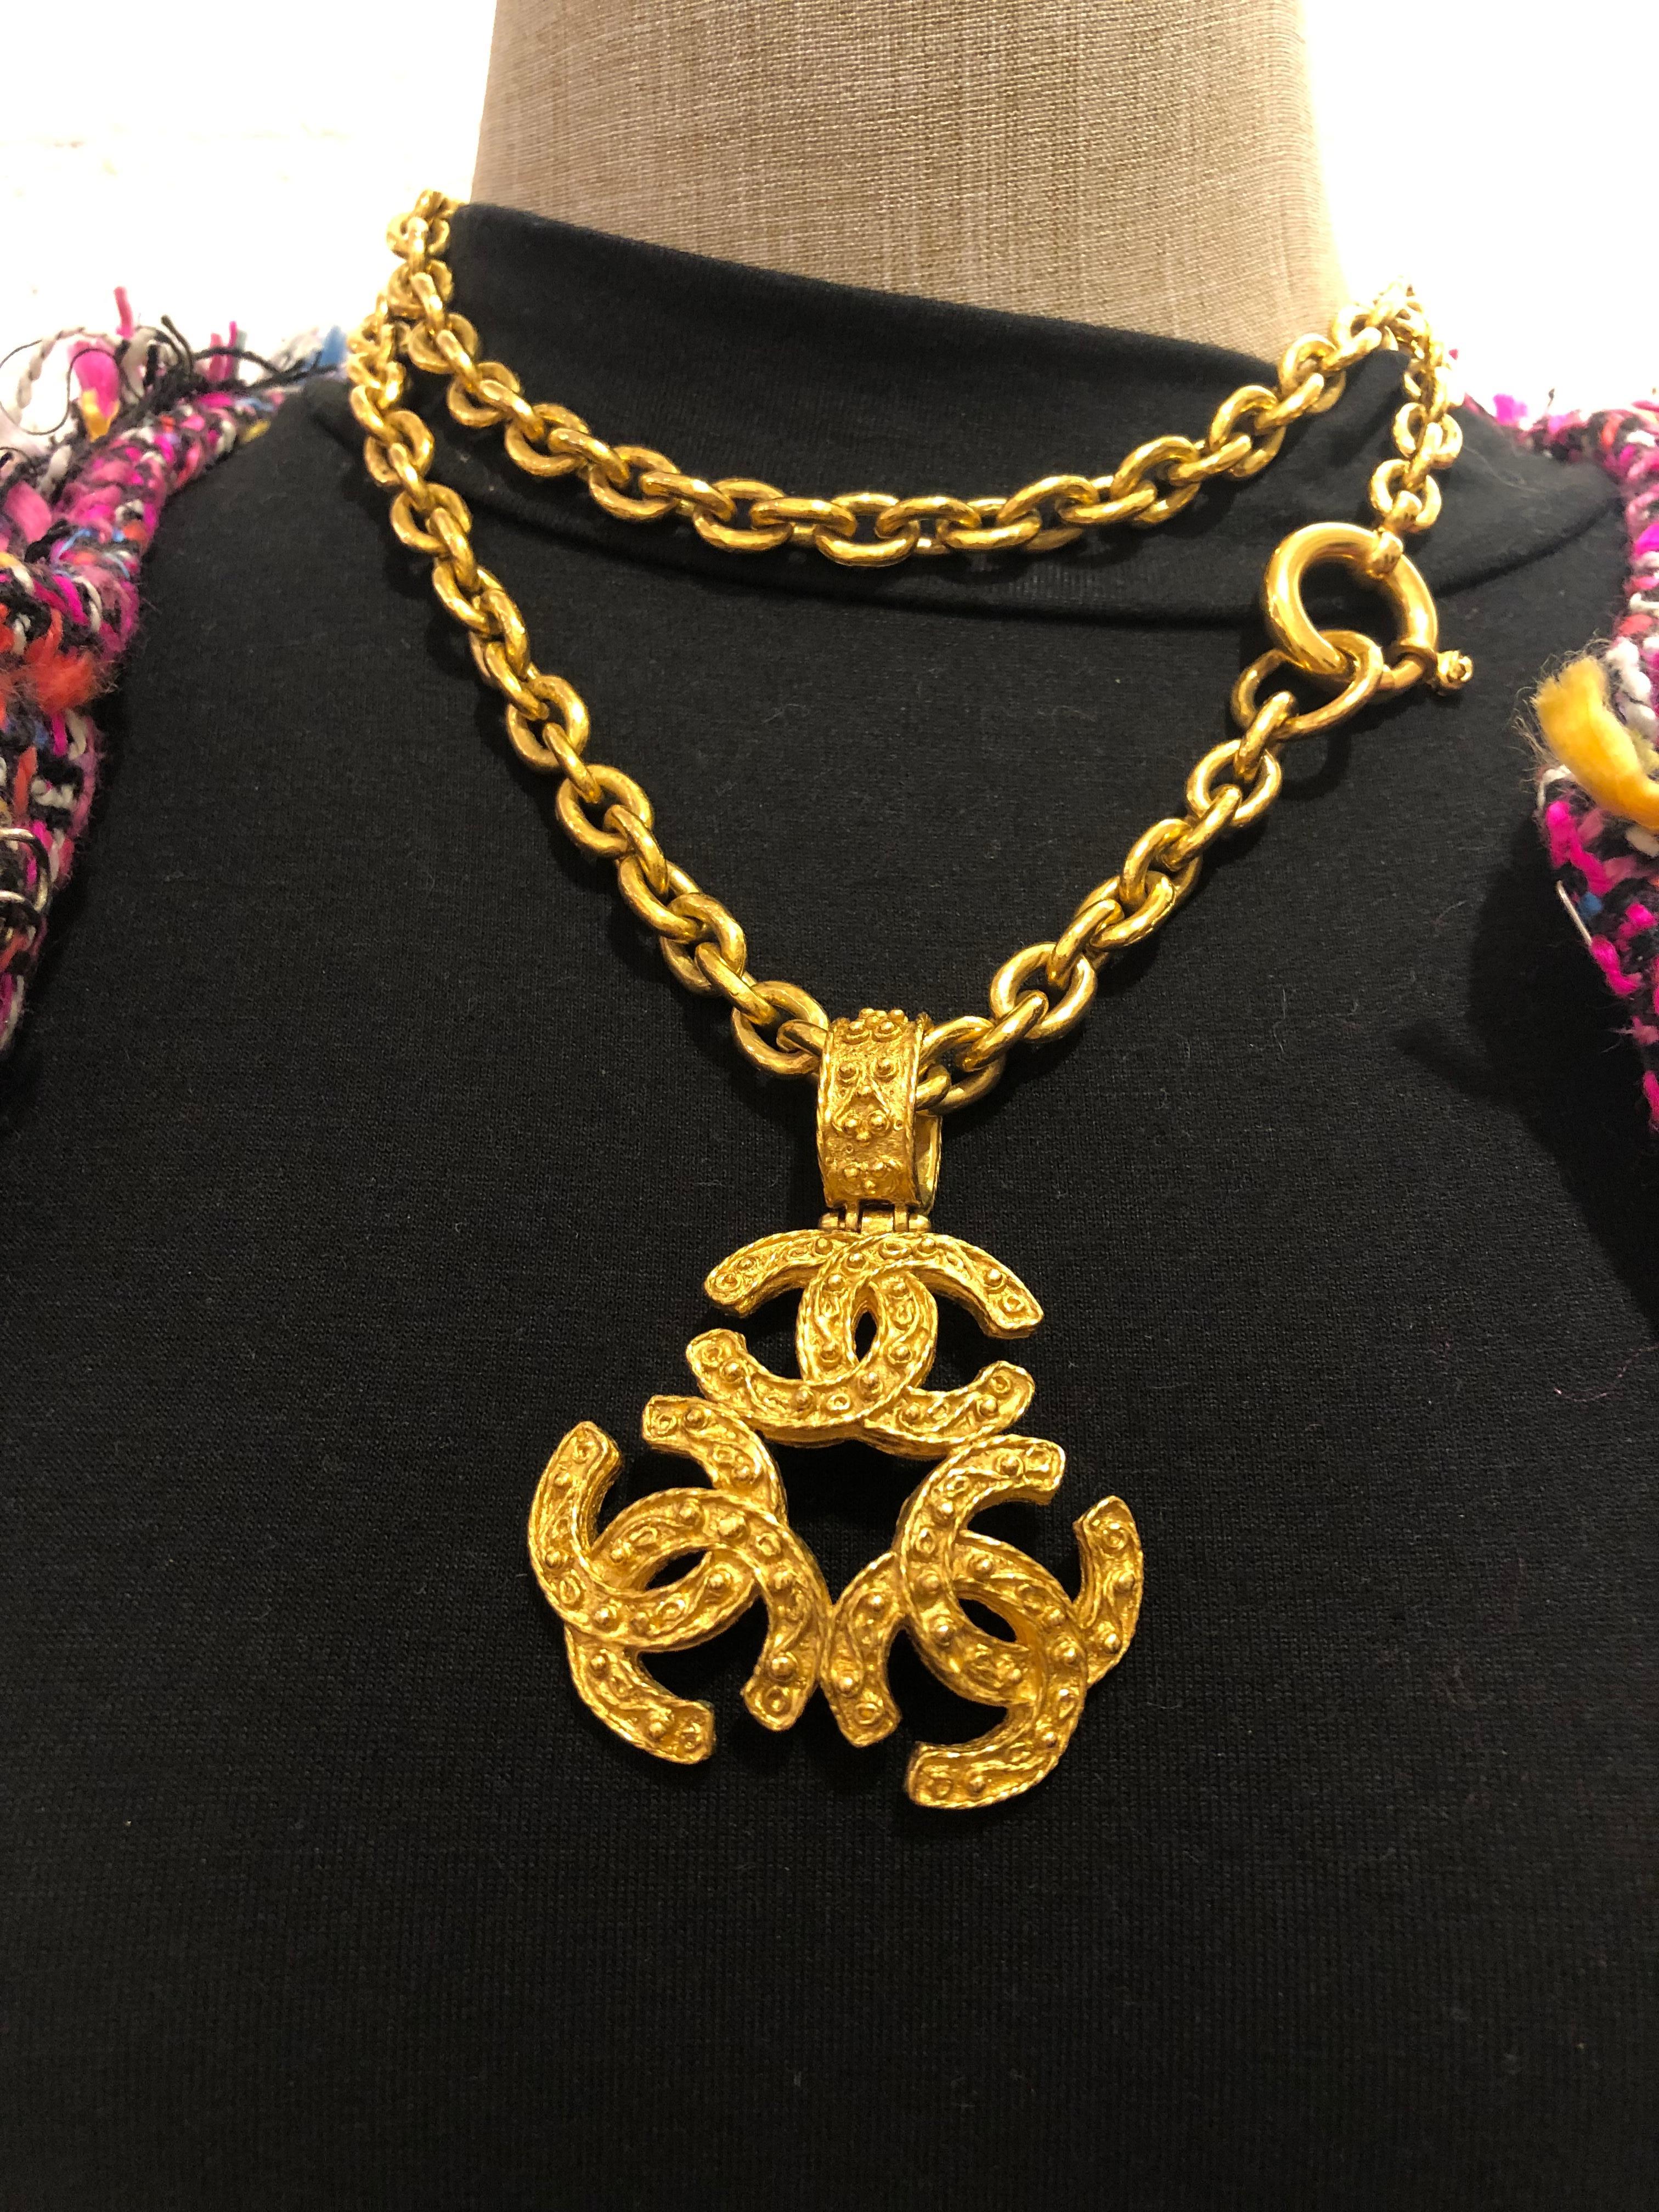 Women's or Men's 1994 Vintage CHANEL Gold Toned Triple CC Chain Necklace